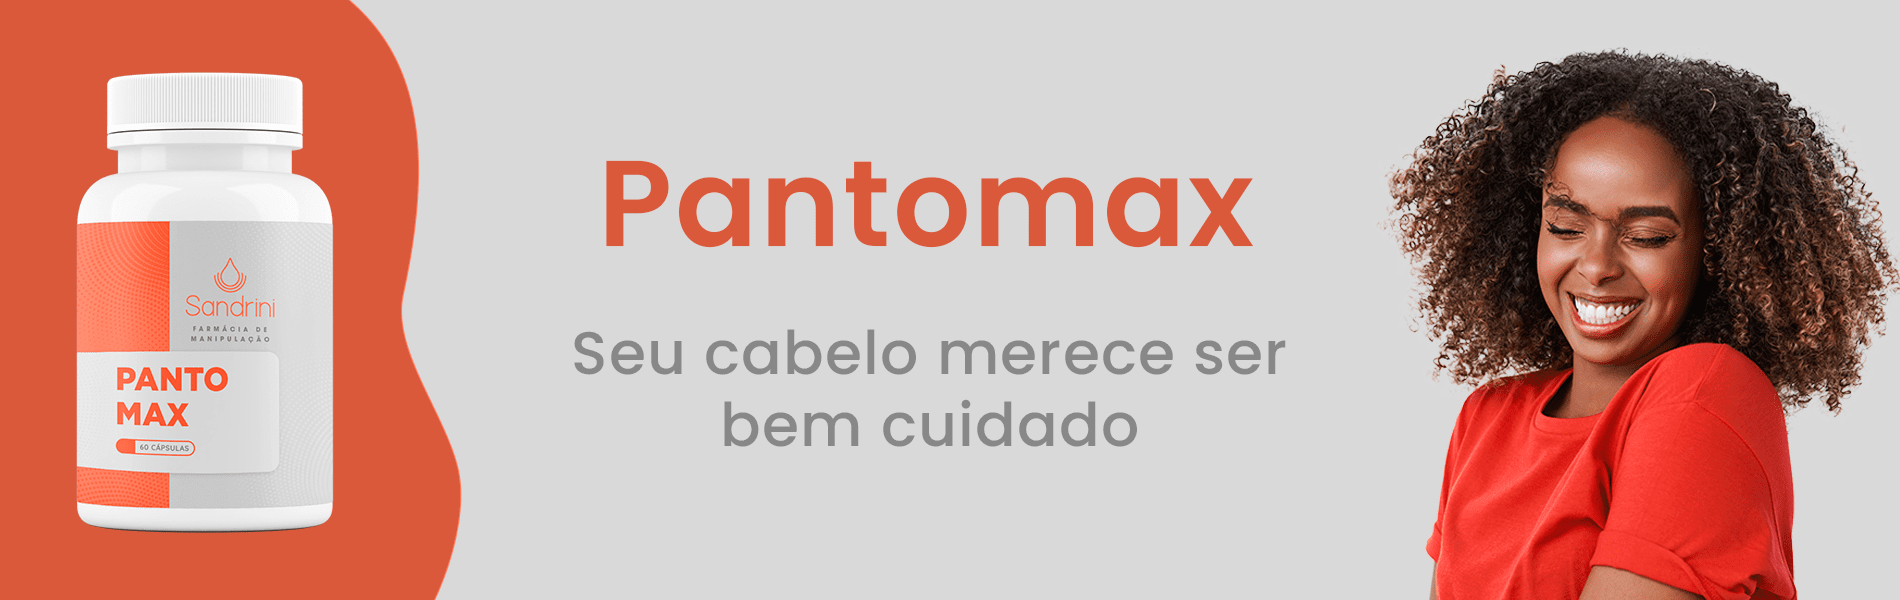 banner-1900x600-pantomax